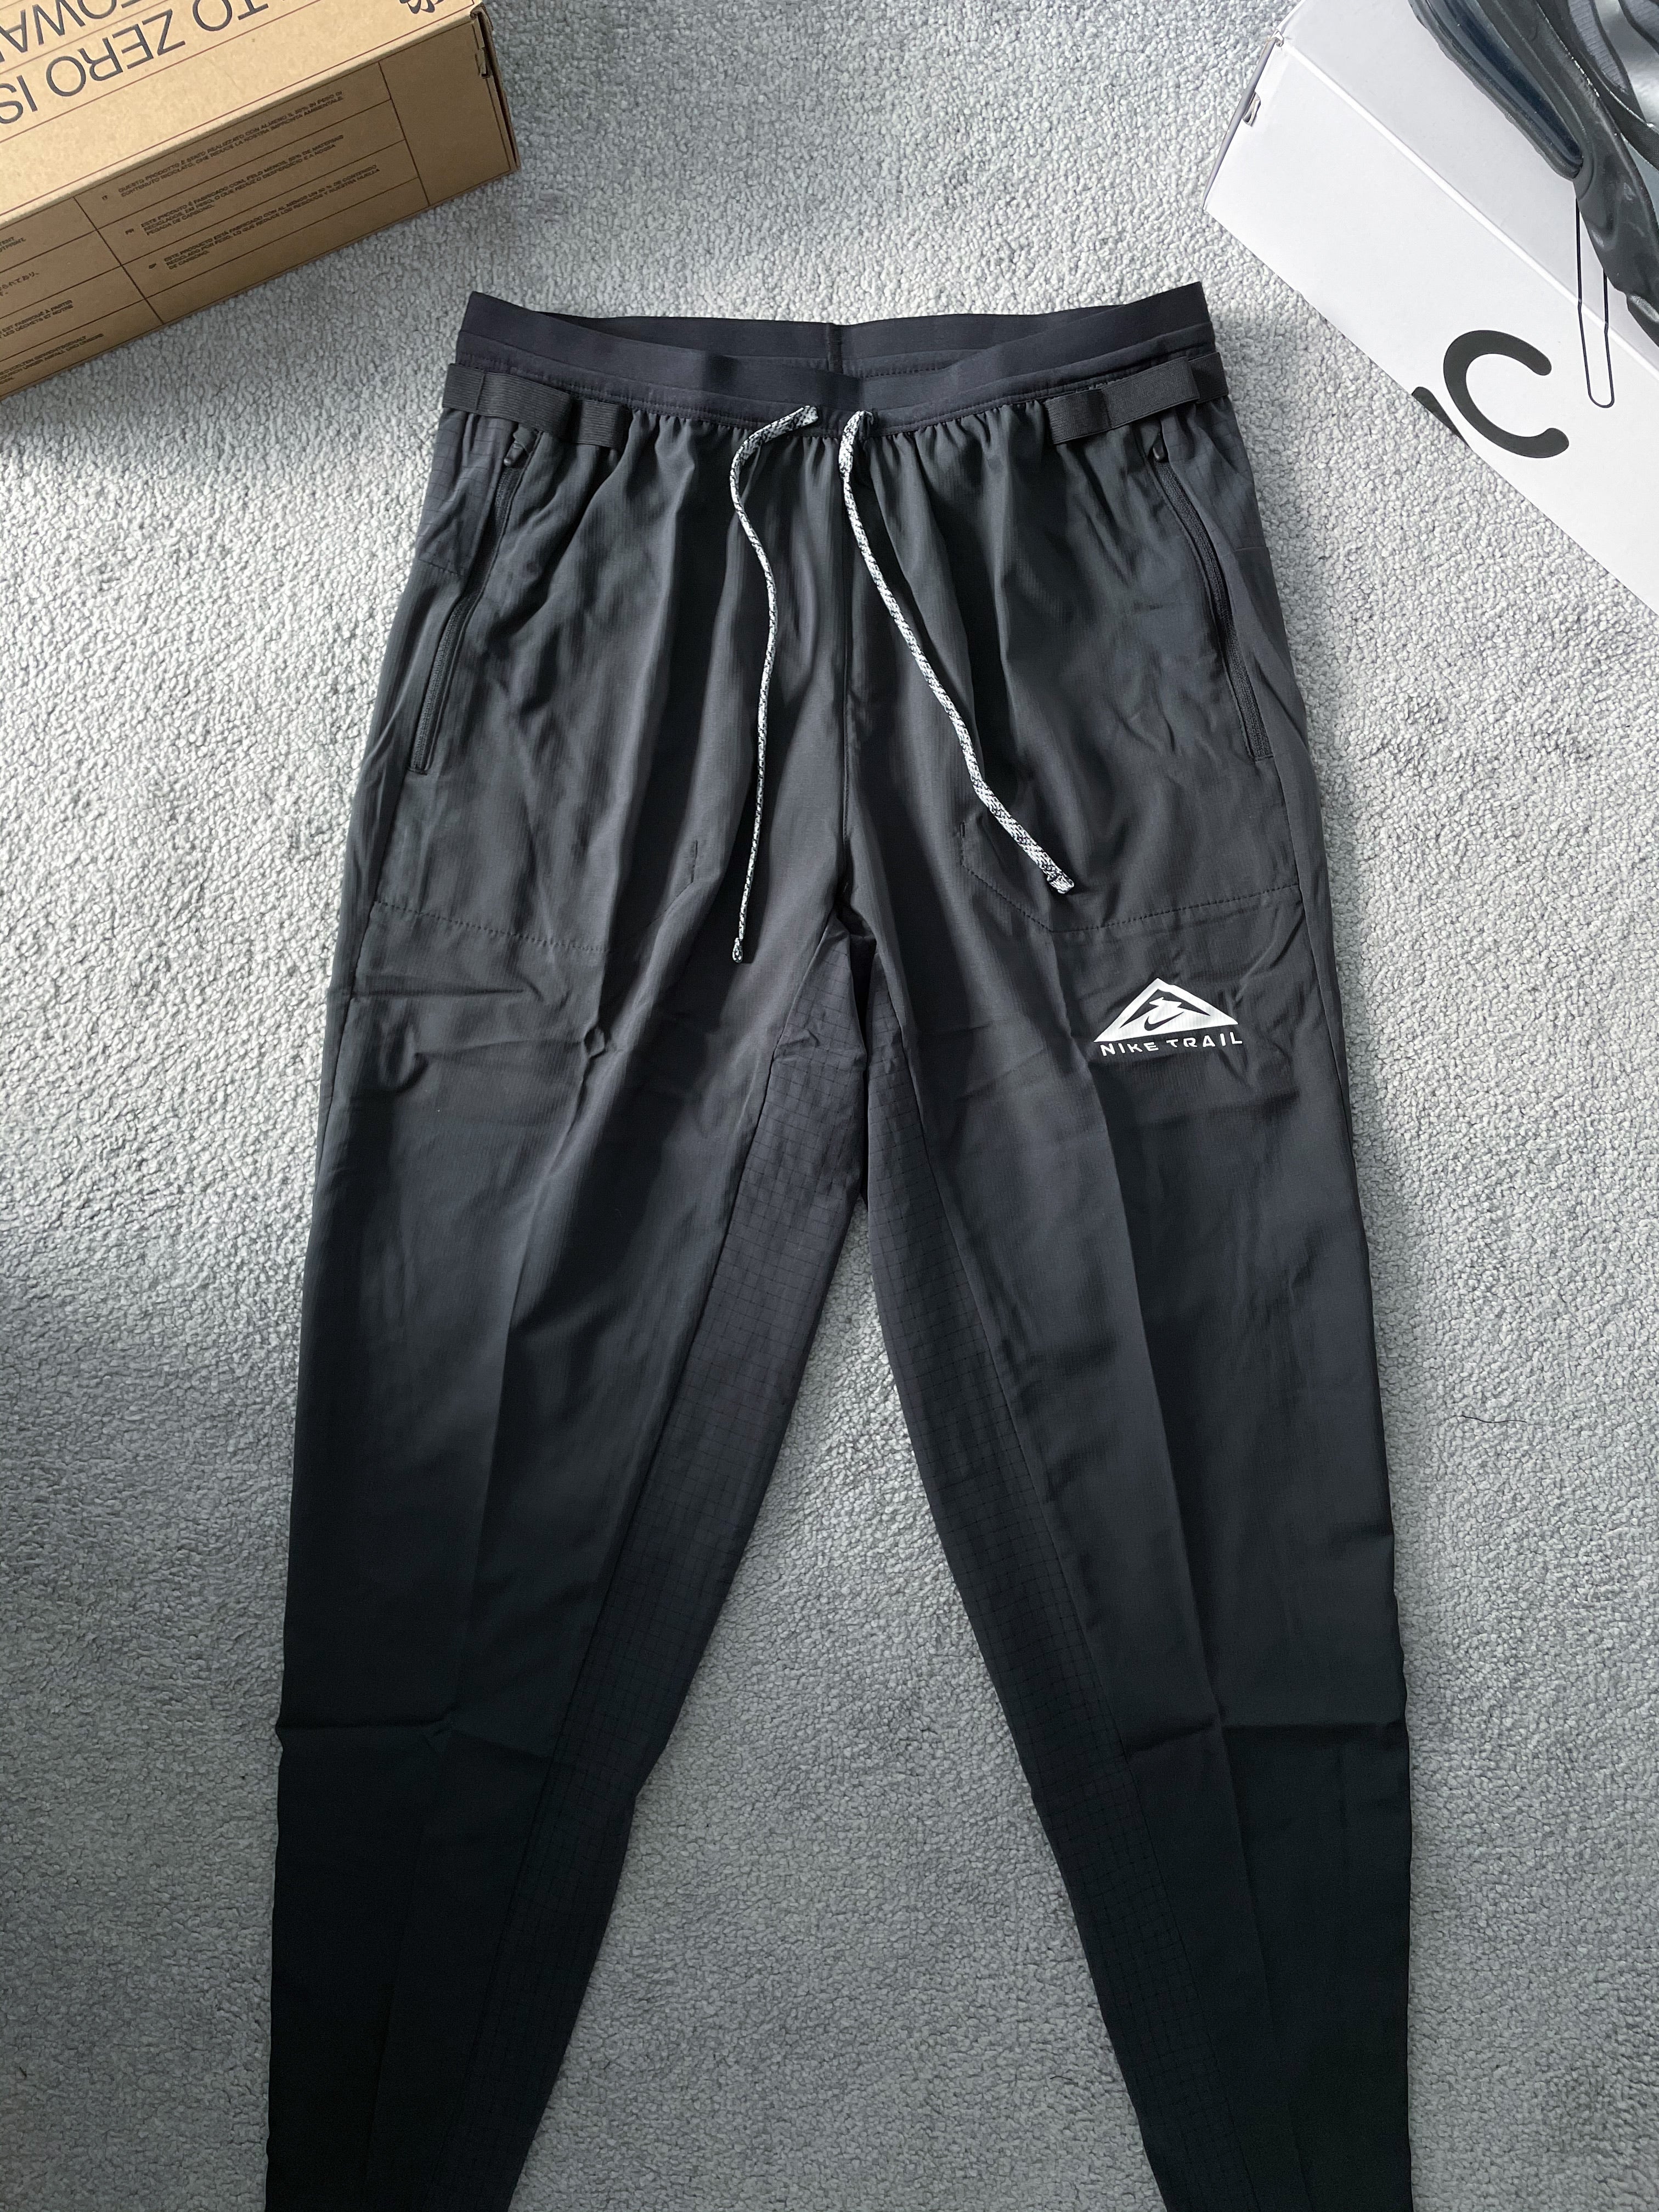 Nike Running Trail Phenom Elite Pants - Black